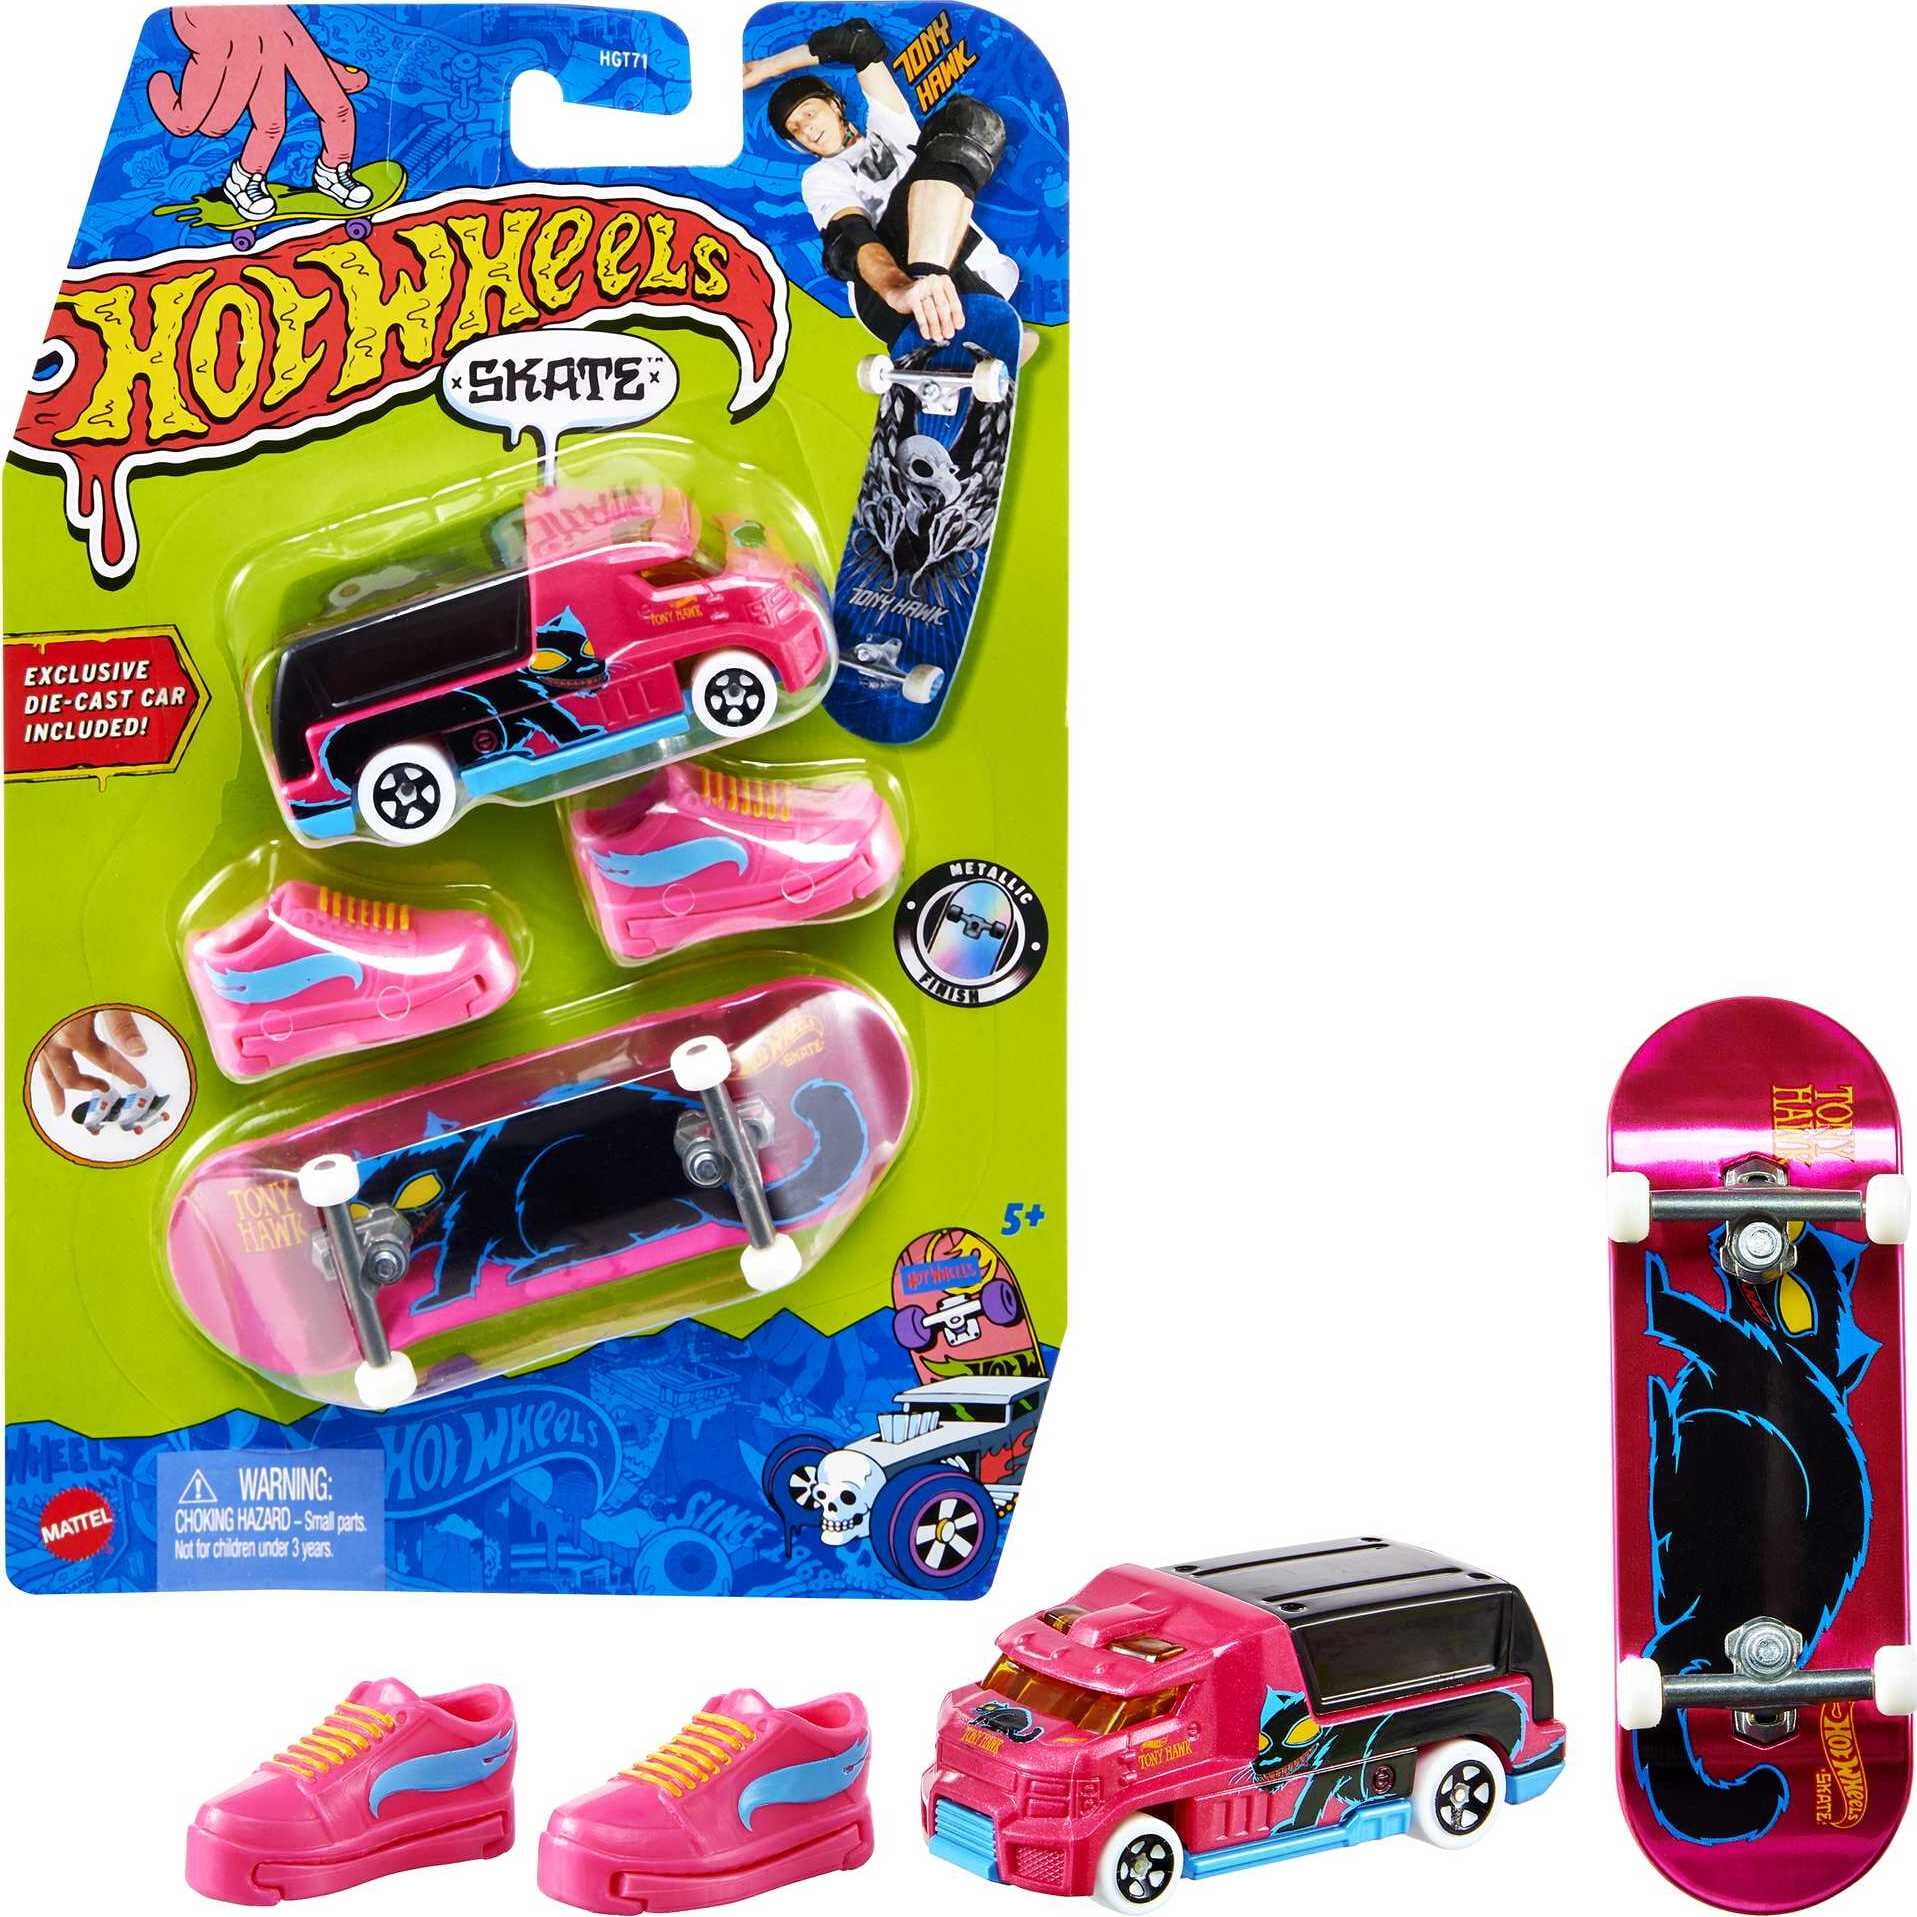 1 - Hot Wheels Skate Tony Hawk, Car and Fingerboard Set, Choose Your  Favorite